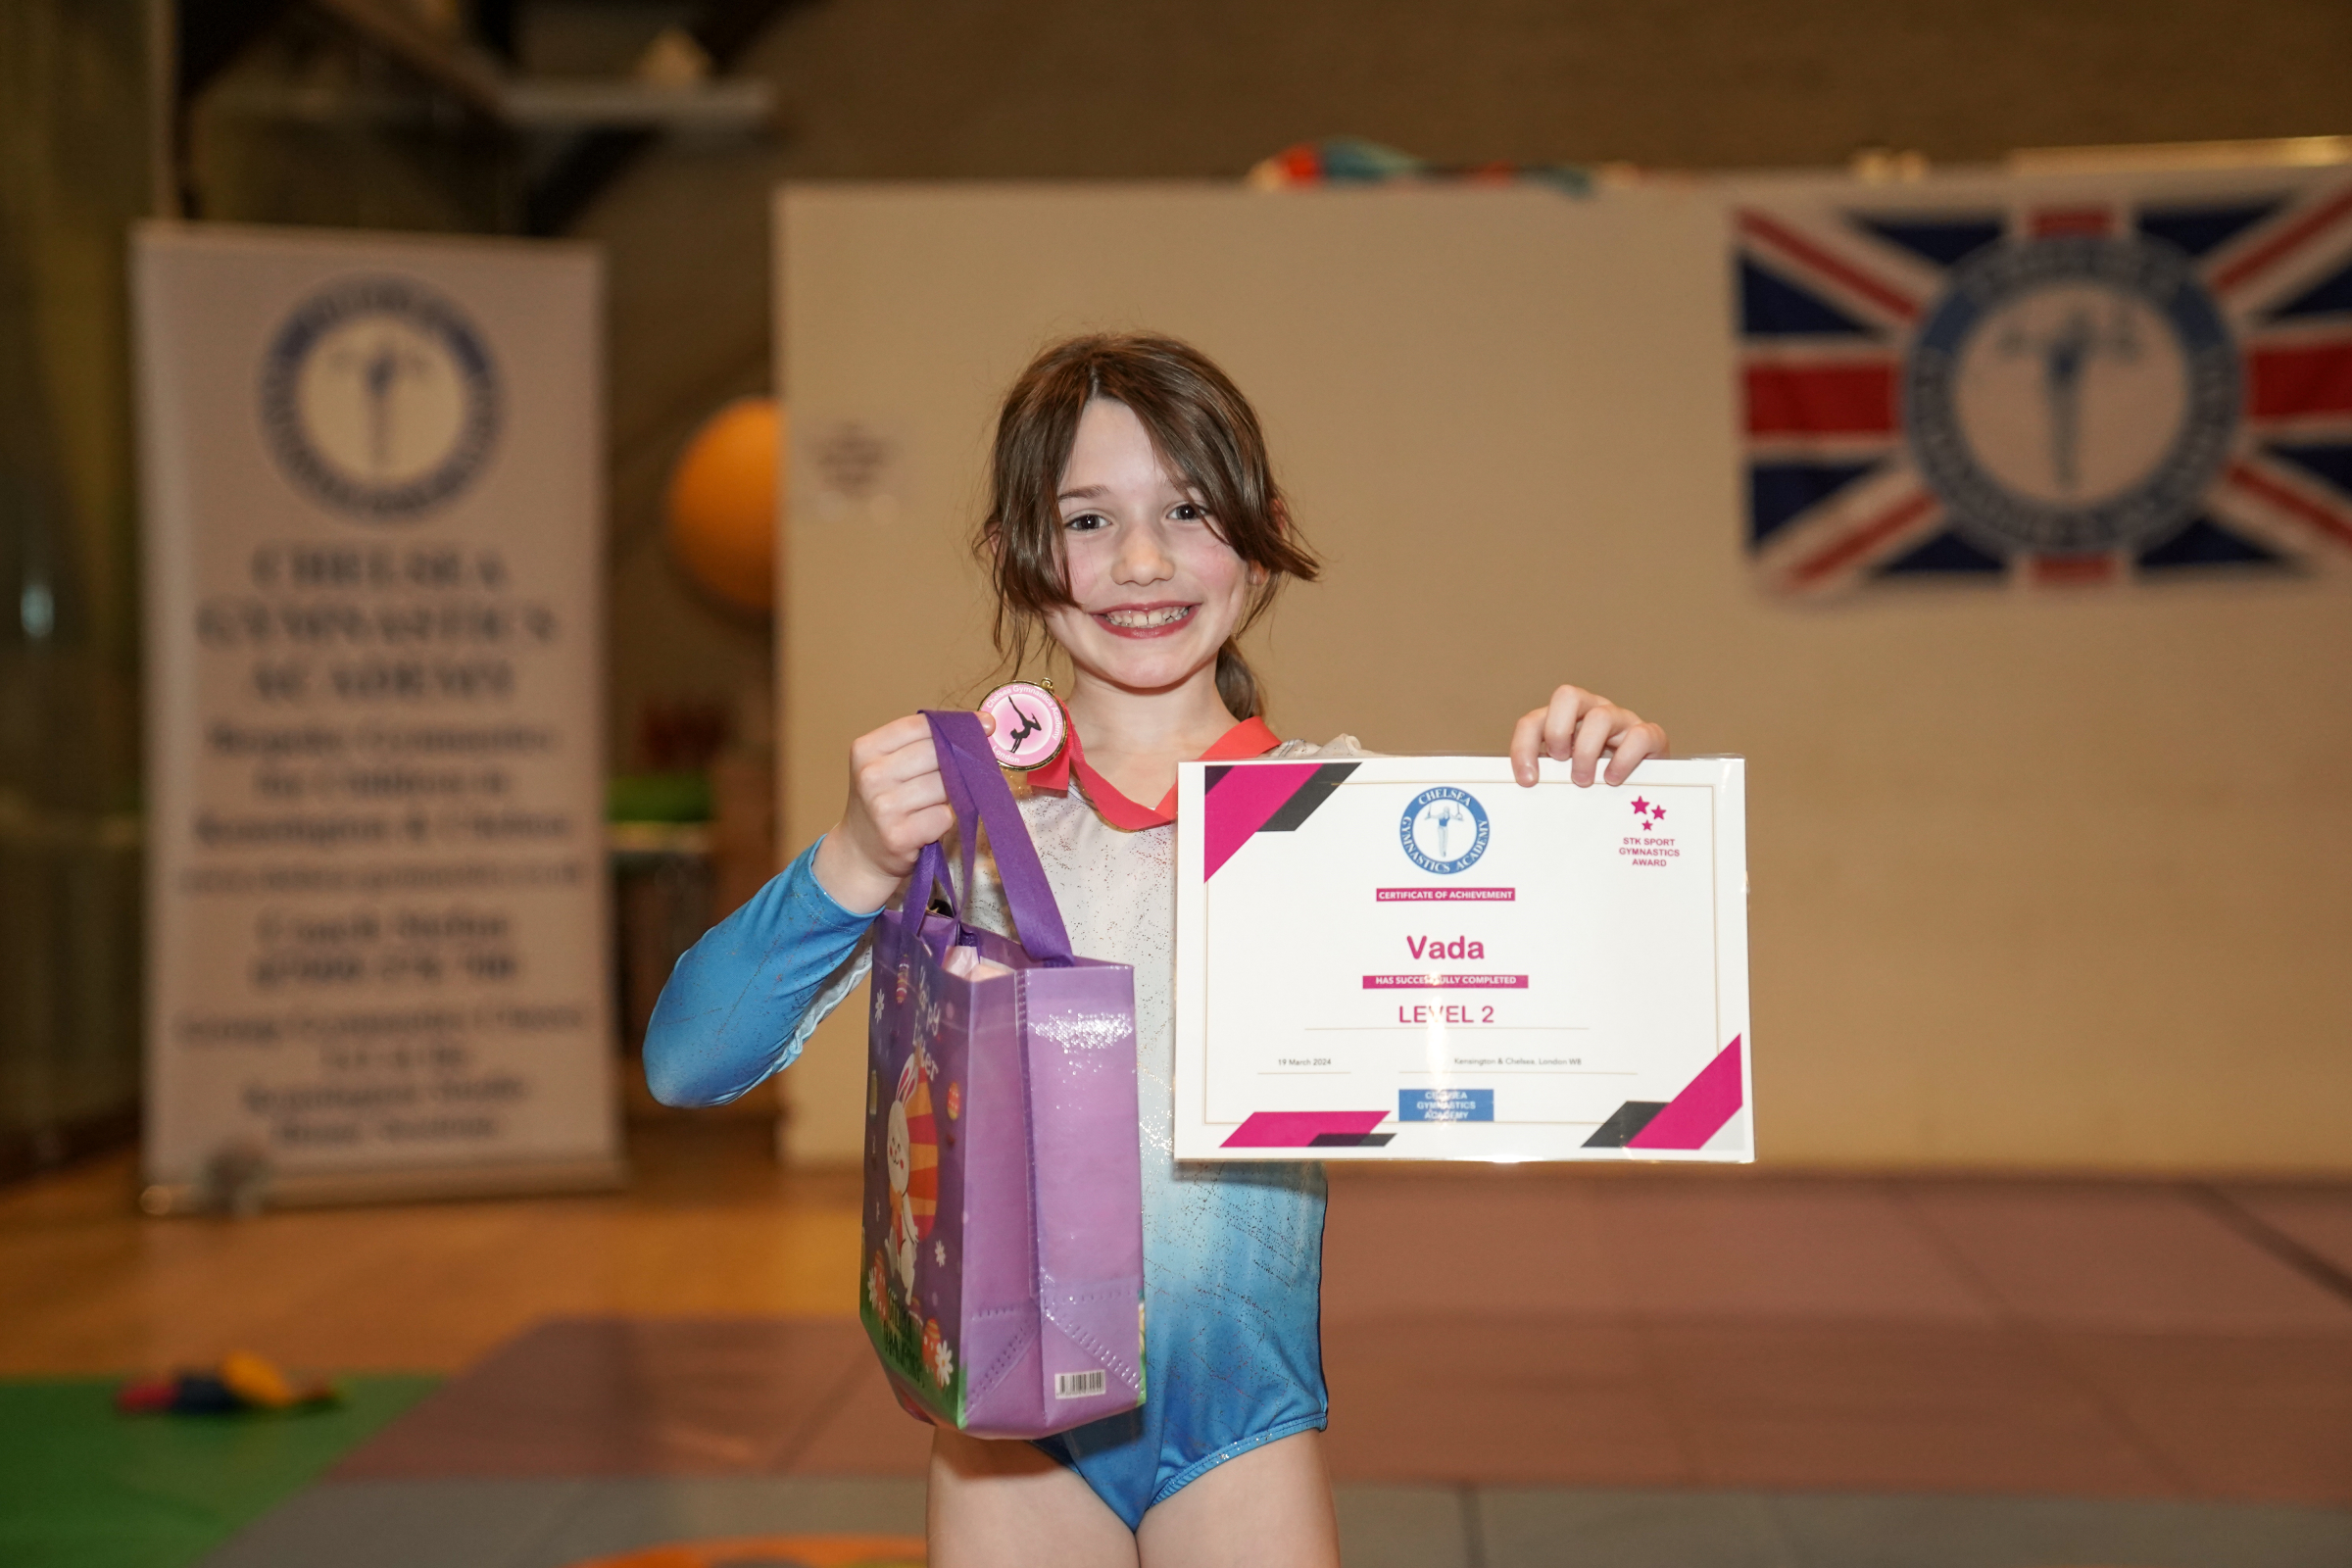 Gymnastics awards for children at Chelsea Gymnastics Academy